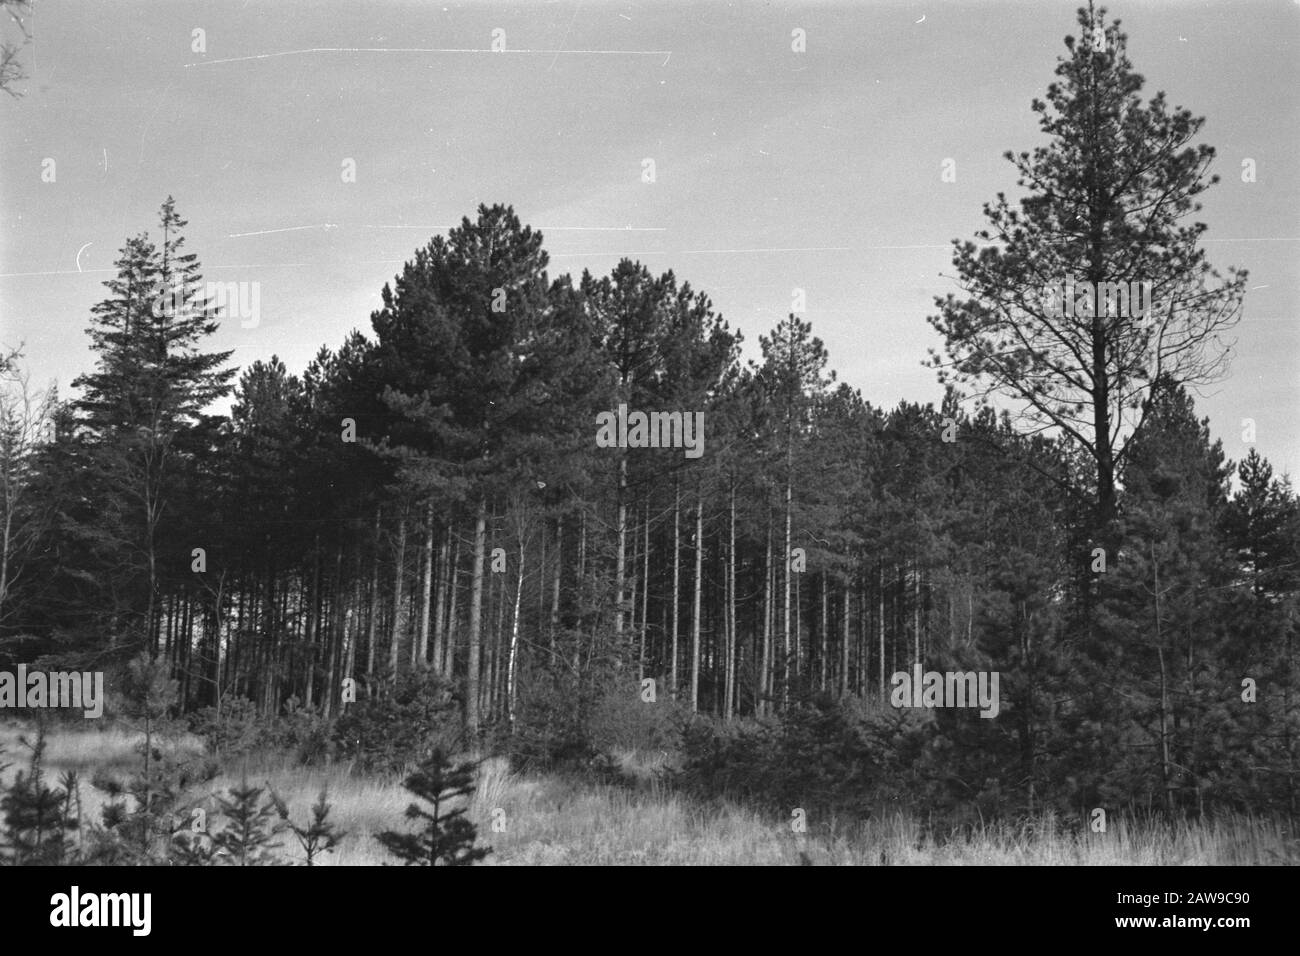 pinussoorten clean horst, Pinus nigra var austriaca Date: undated Location: Wells Keywords: pinussoorten Person Name: Pinus nigra var austriaca clean horst Stock Photo